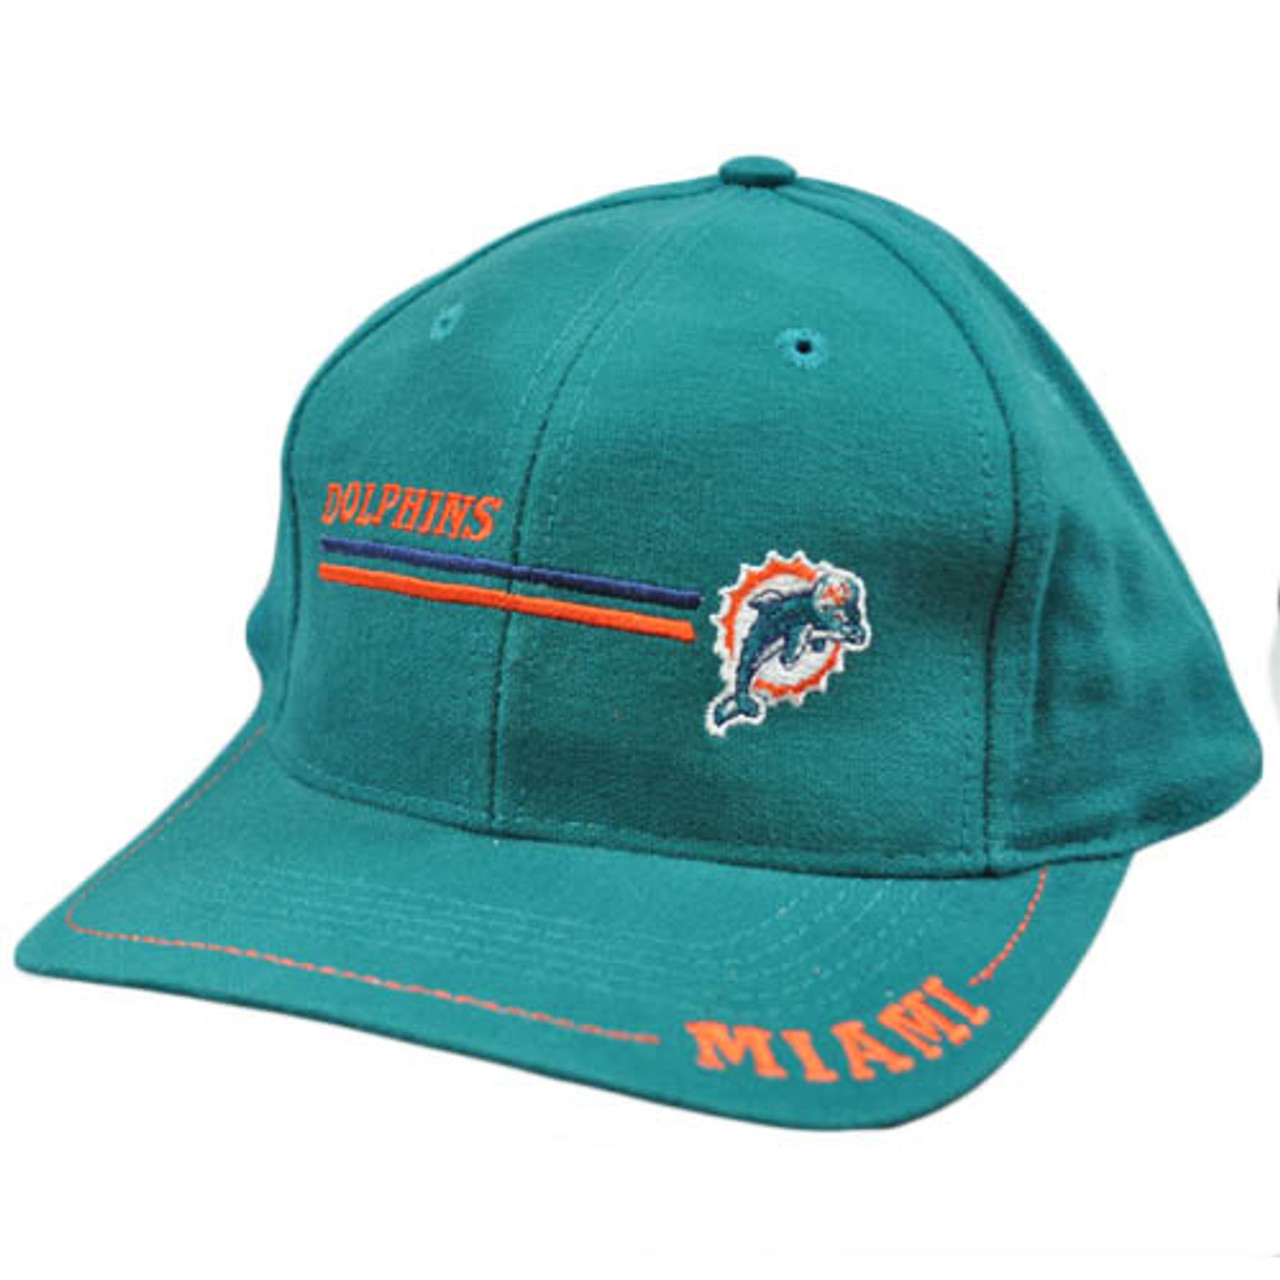 Vintage 90s New Jersey Devils Snapback Hat Cap Rare Retro Logo 7